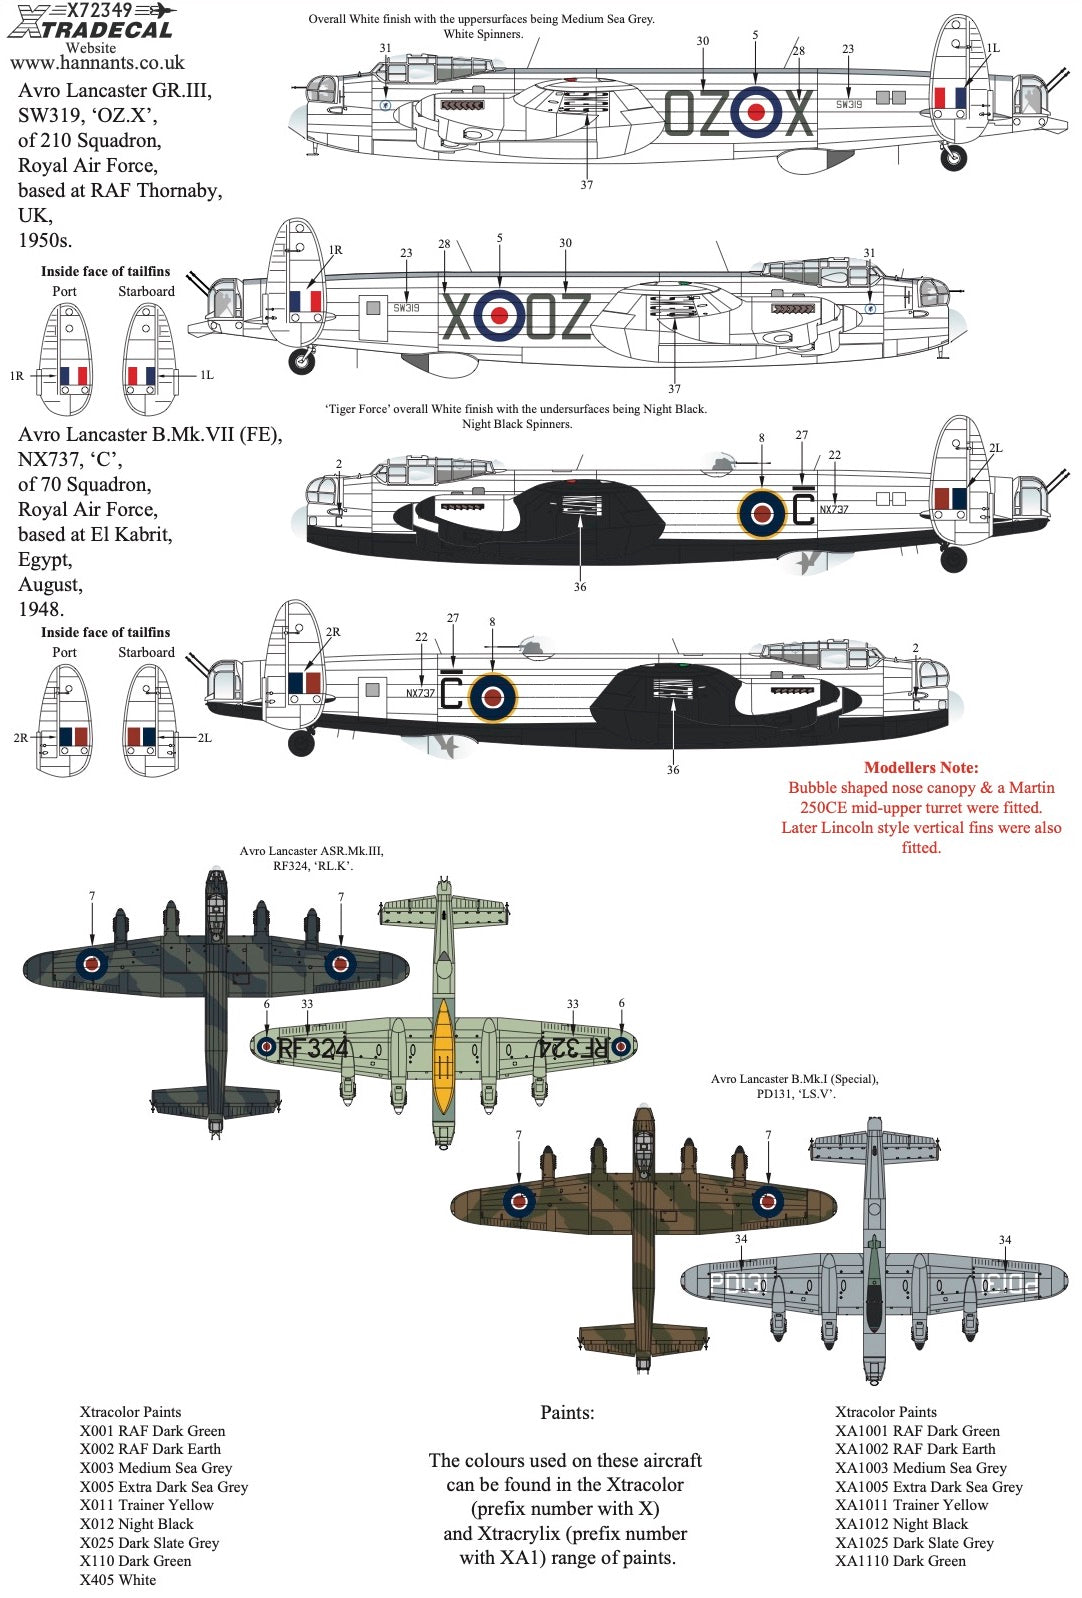 Xtradecal X72349 Post War Avro Lancaster Part 2 1/72